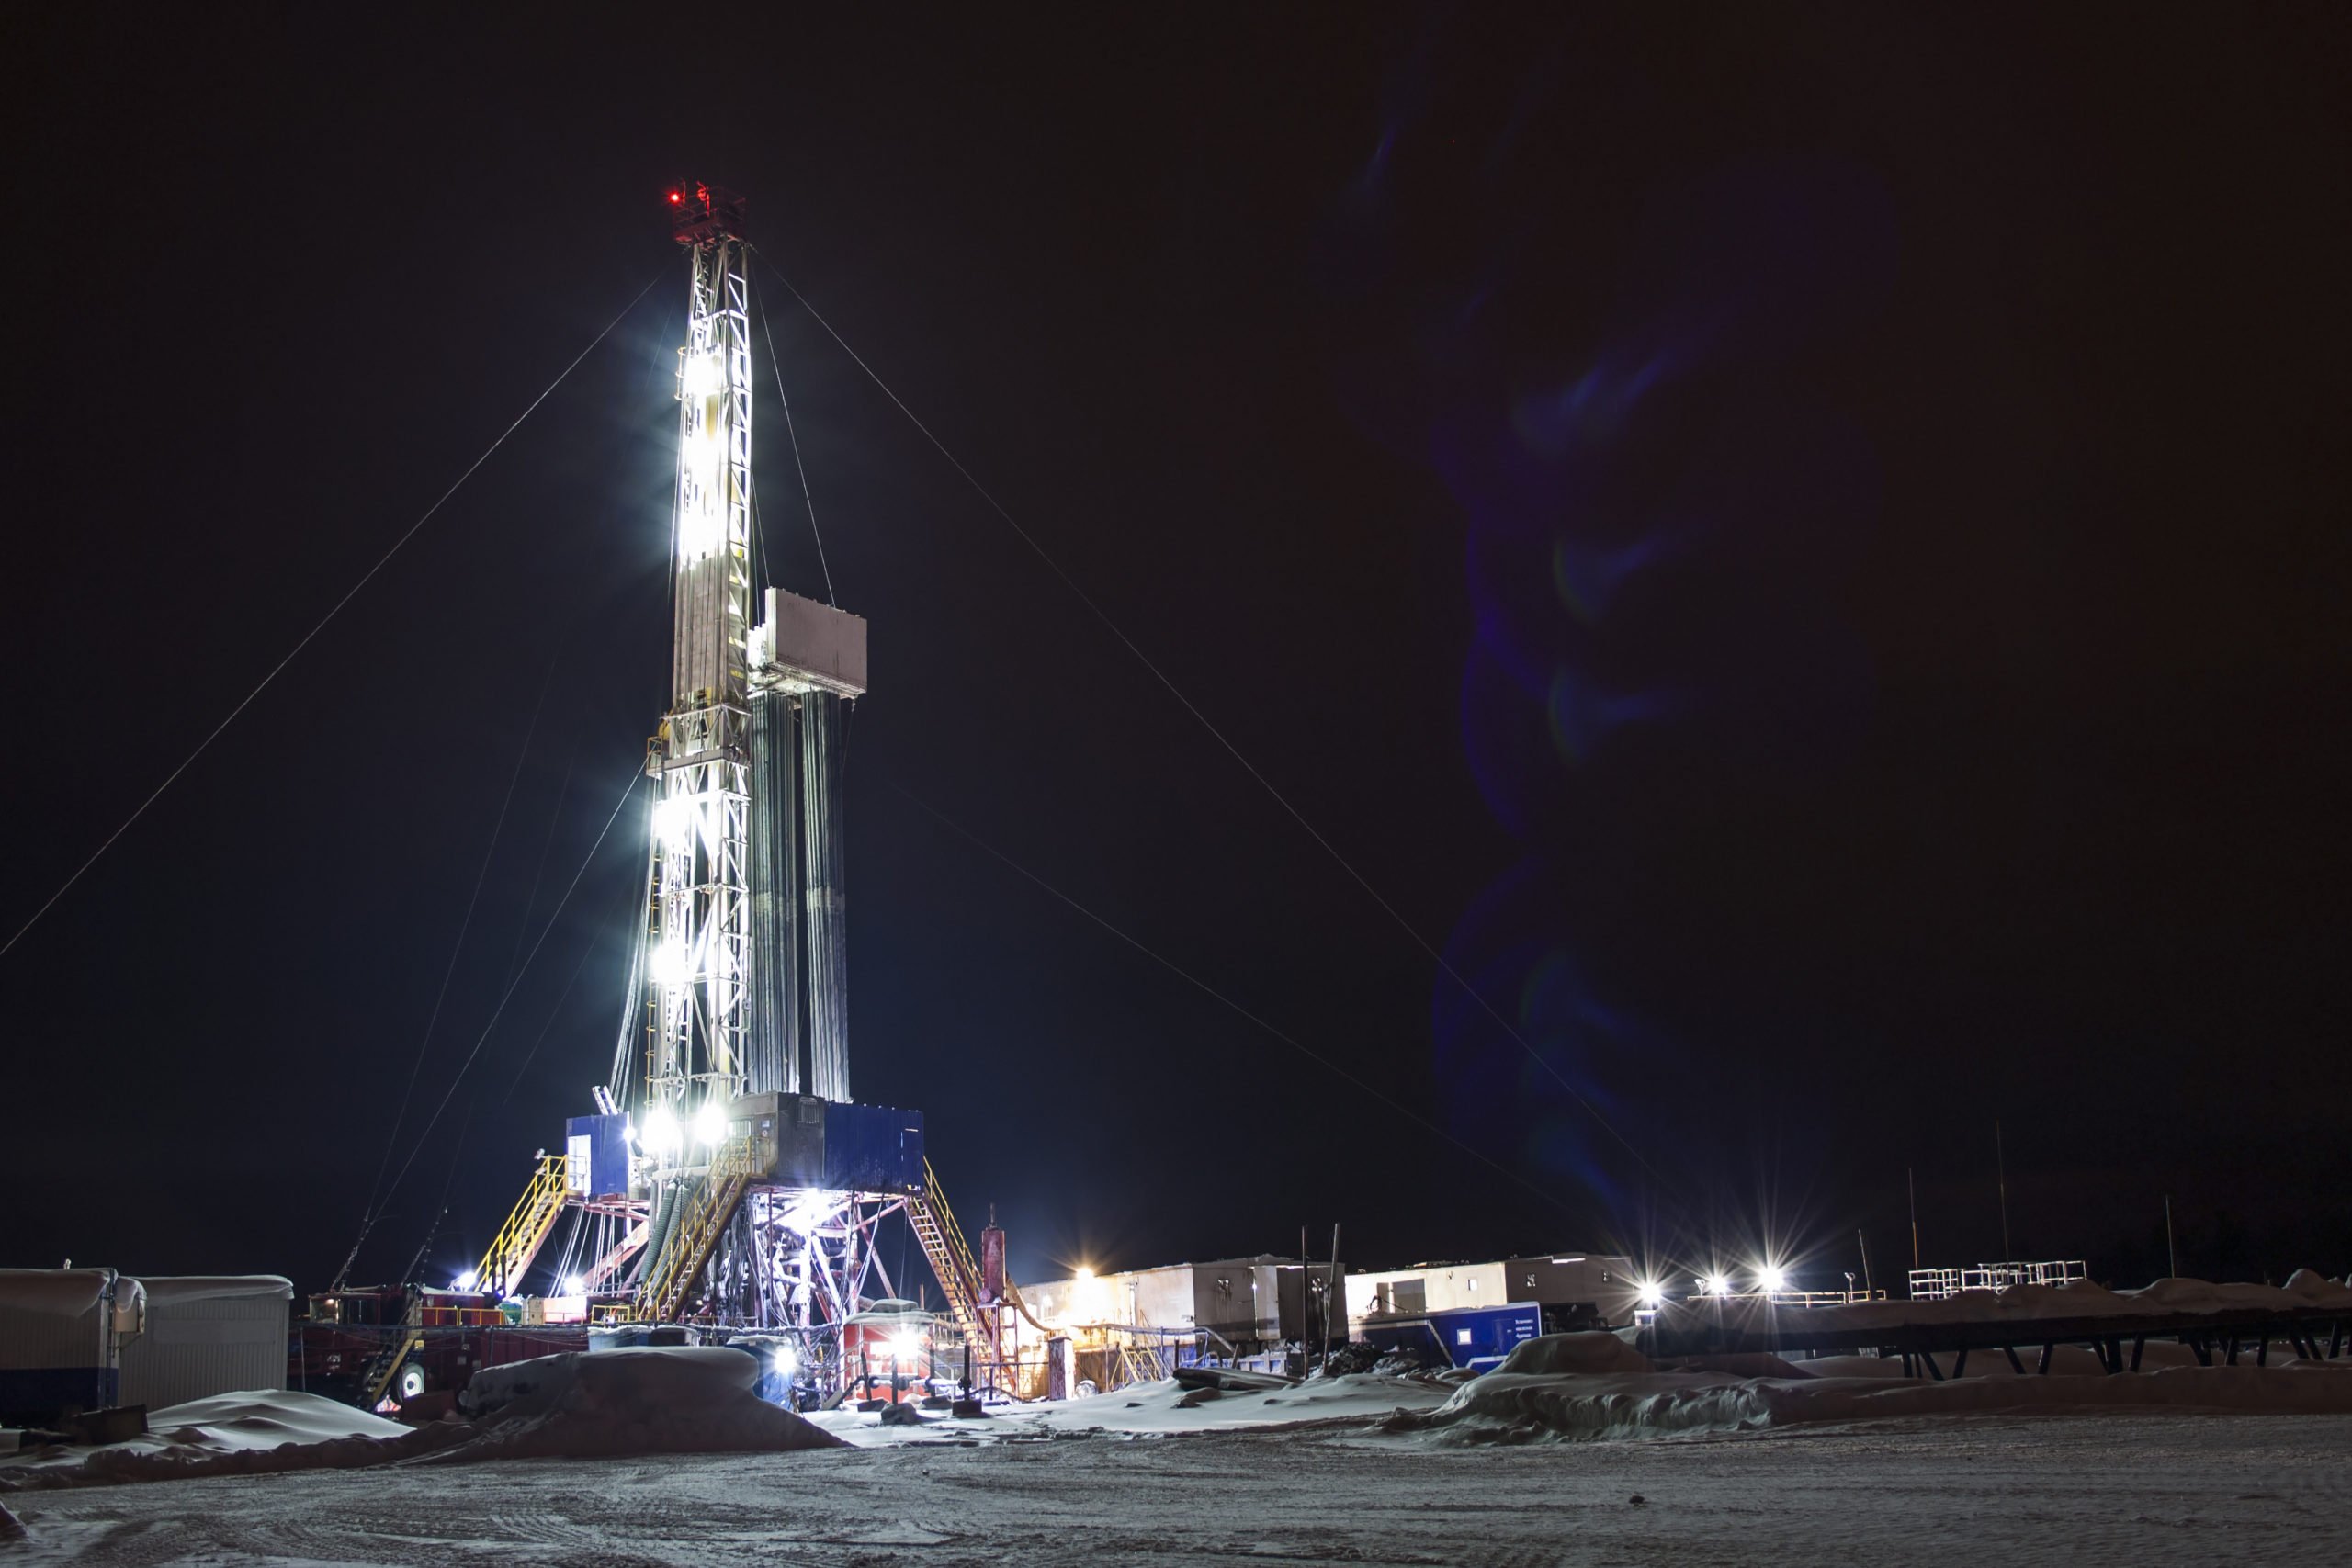 Oil drilling rig at night in Siberia. Winter. Landscape